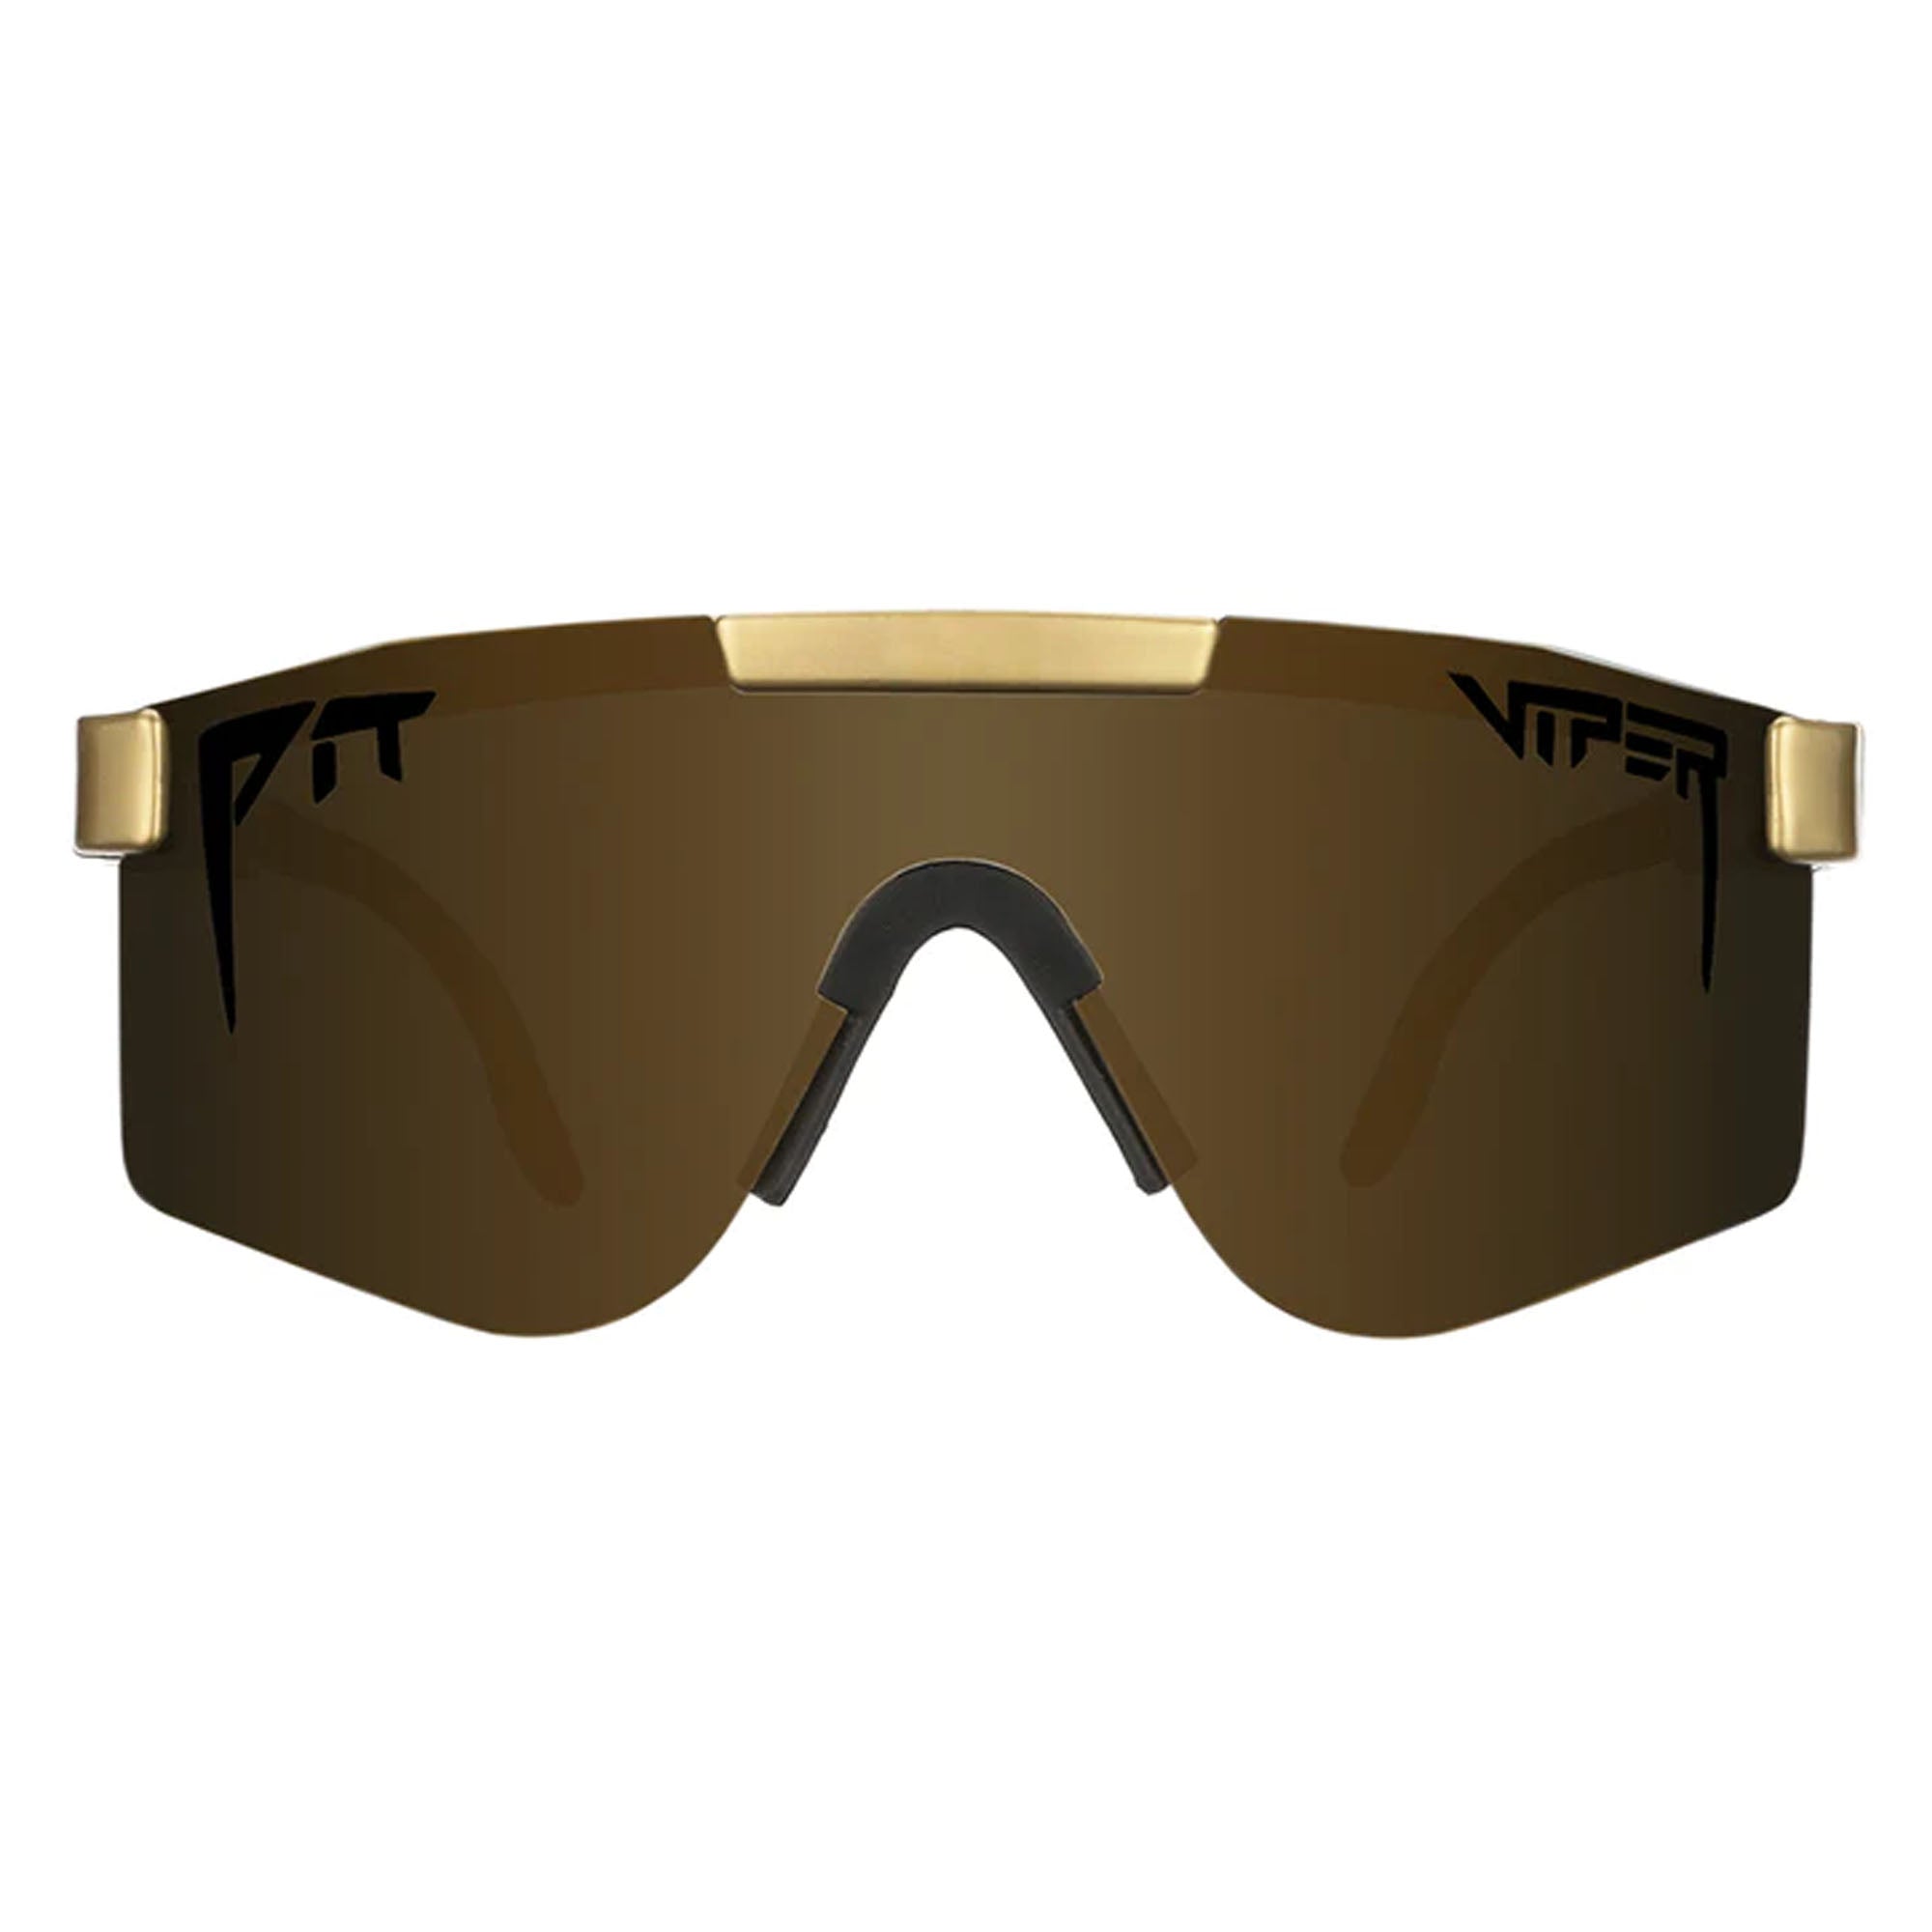 Pit Viper The Gold Standard Polarized Men's Sunglasses - Surf